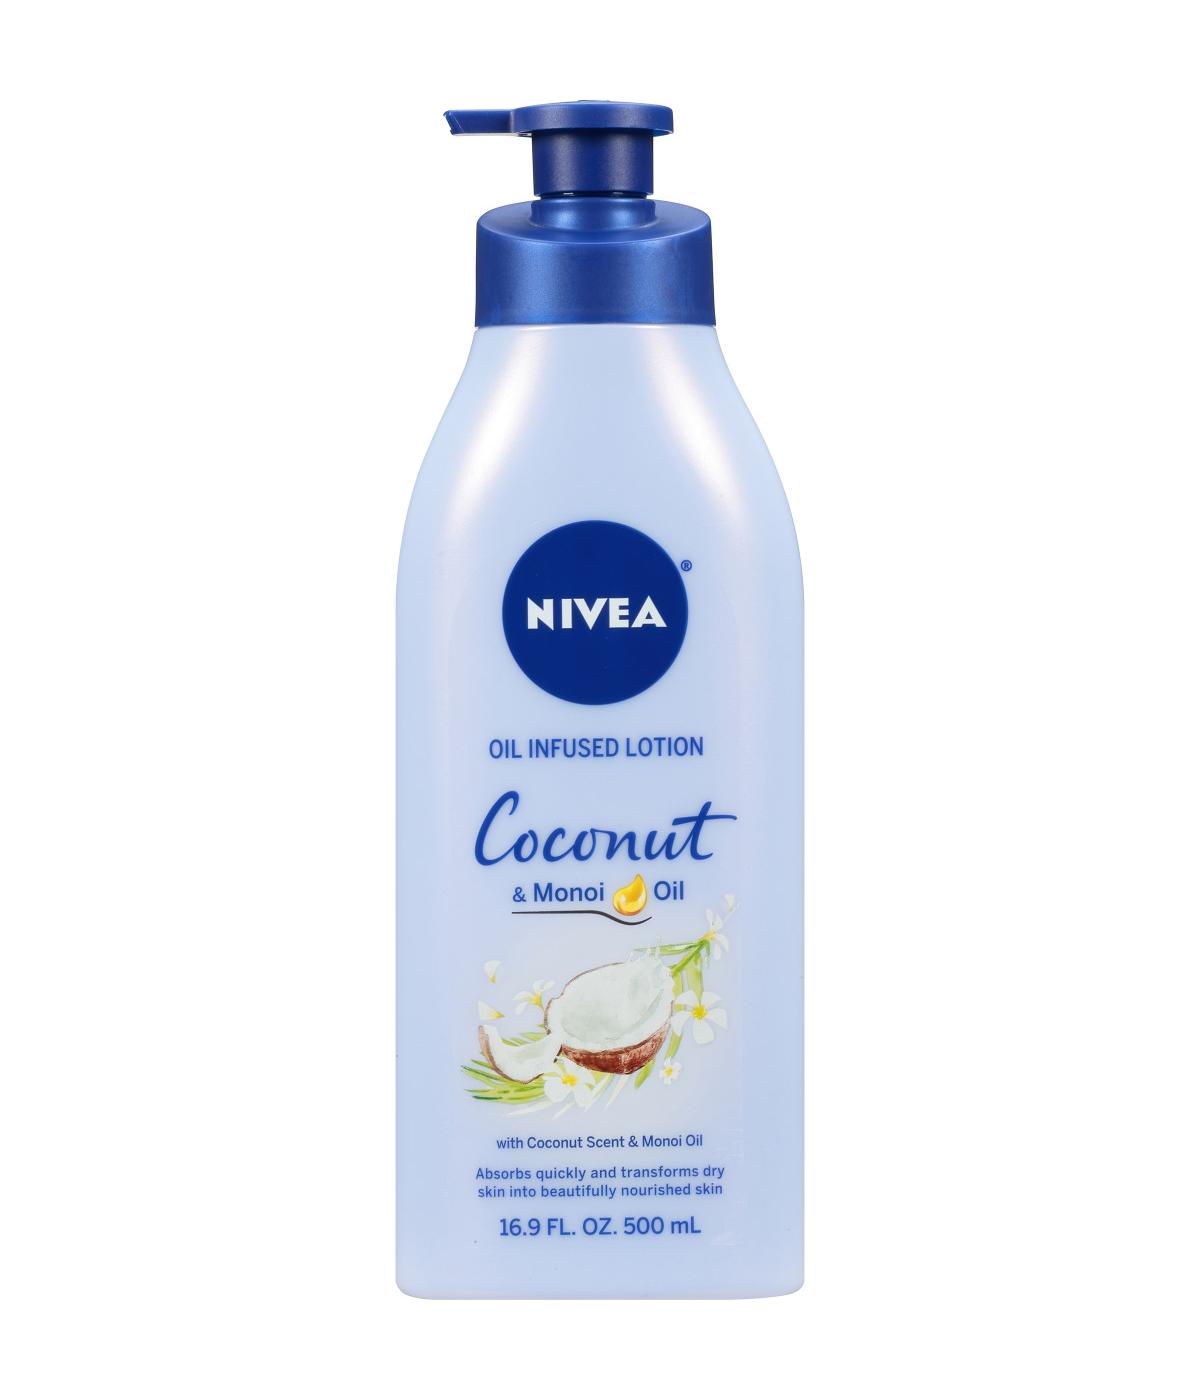 NIVEA Coconut & Monoi Oil Infused Body Lotion Pump Bottle; image 1 of 4